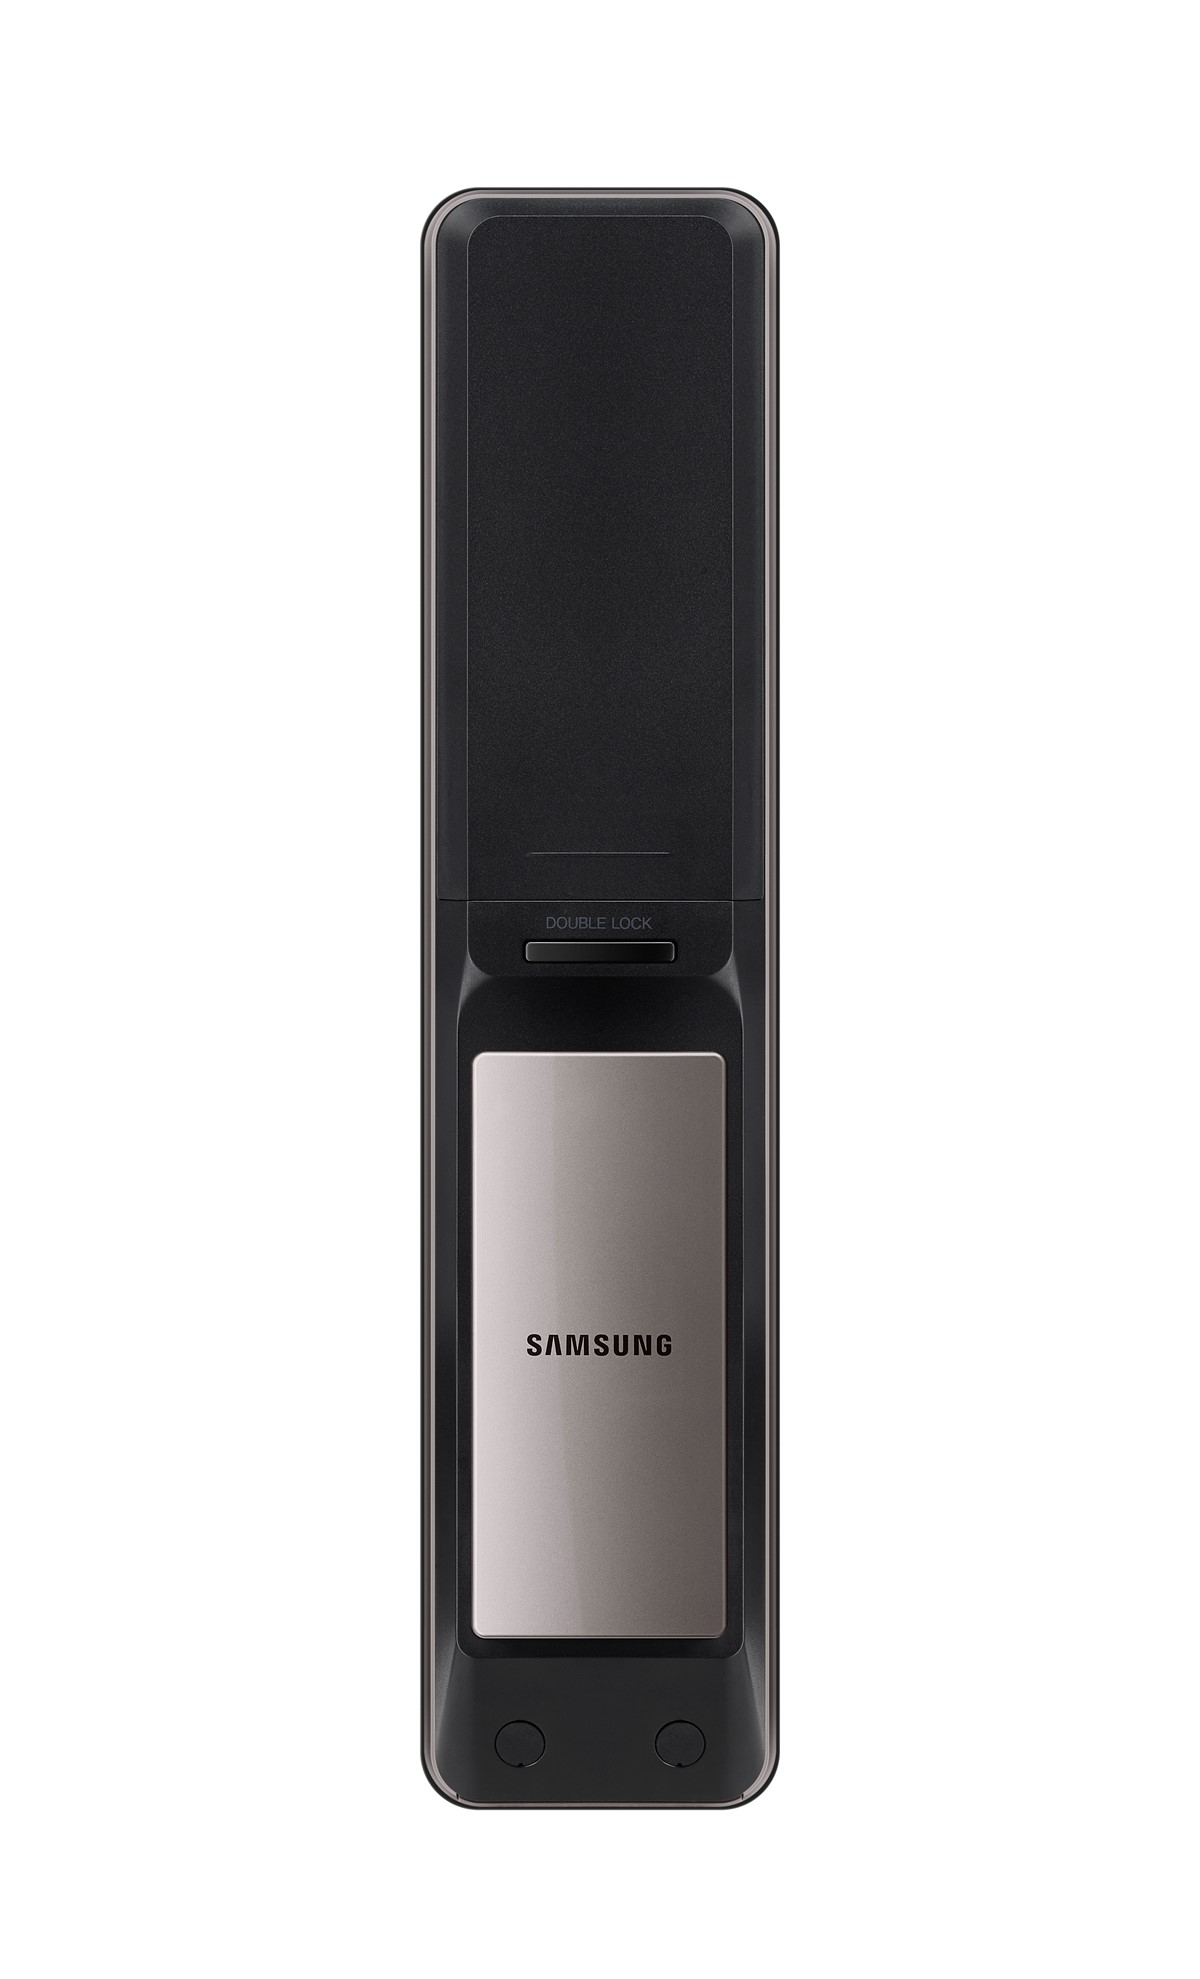 Samsung Digital Door Lock SHP-DP609